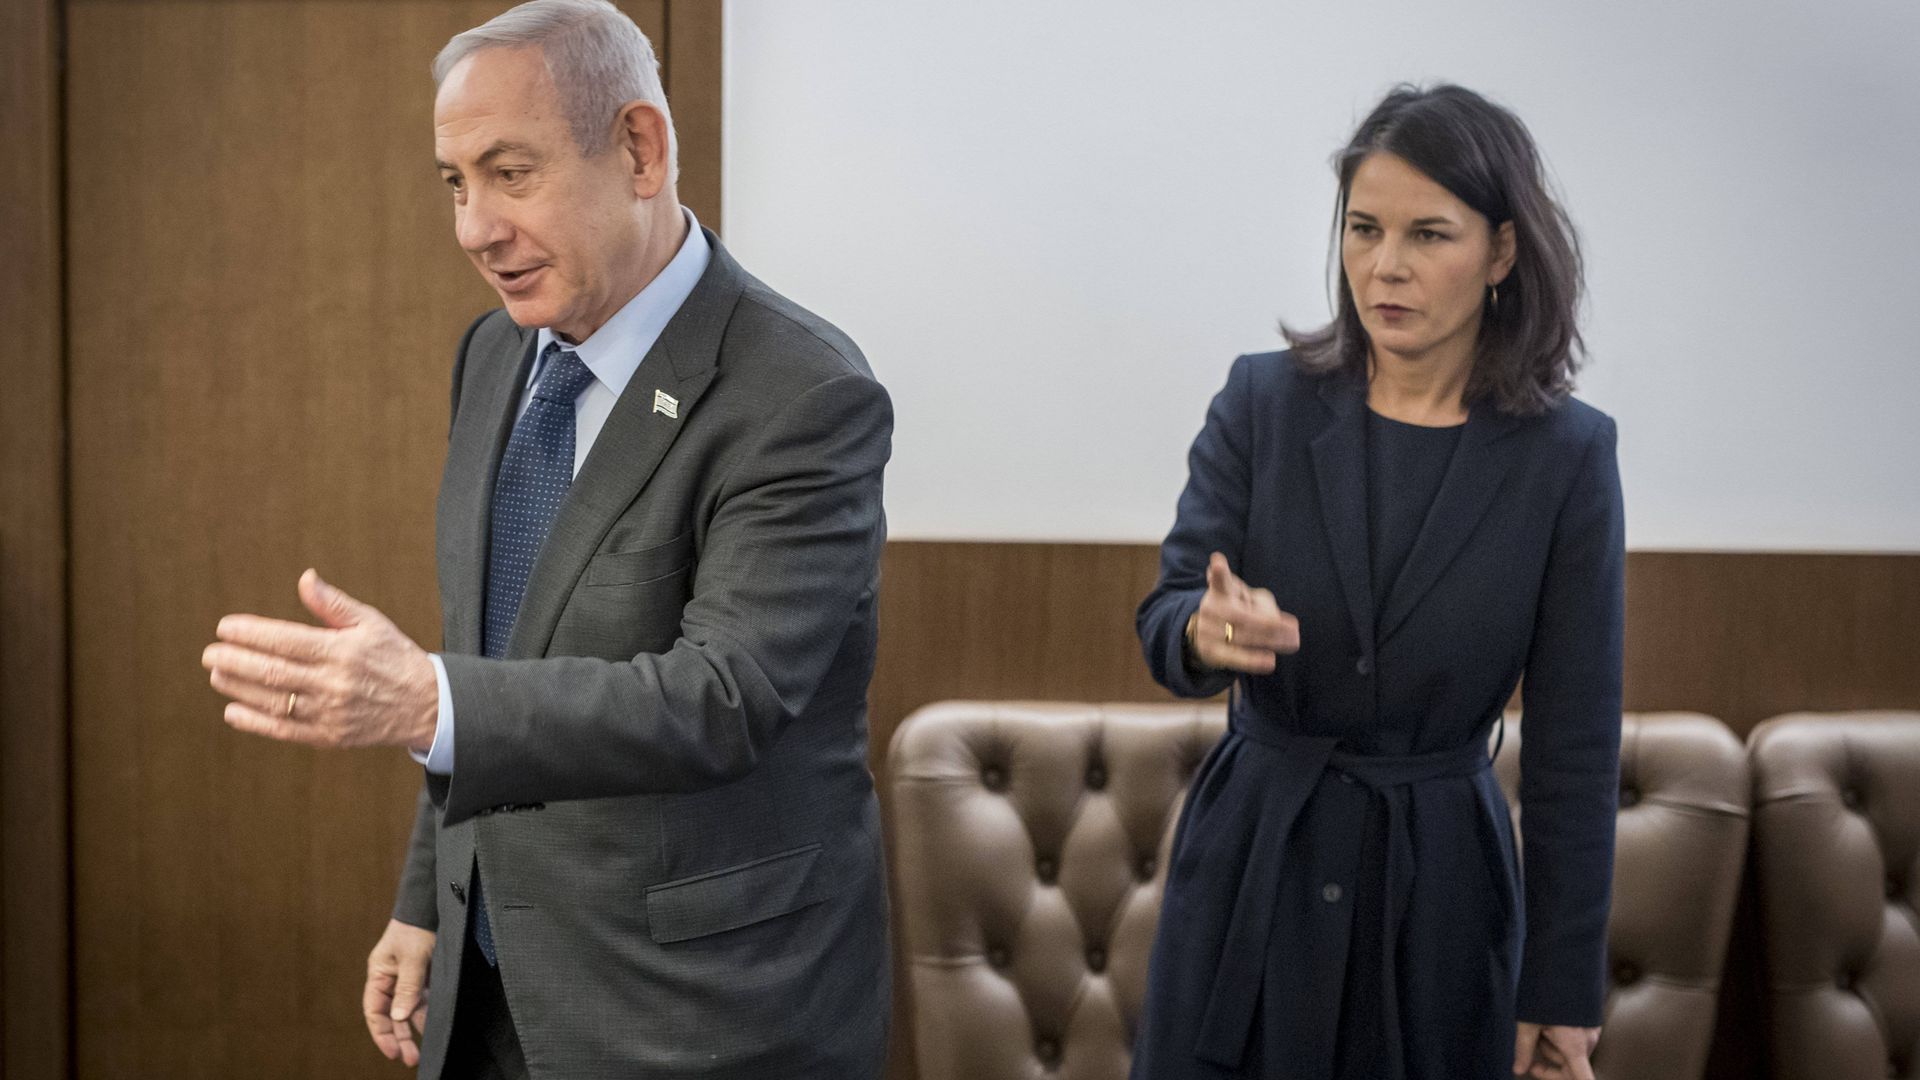 israel-gaza-krieg: benjamin netanyahu kündigt »kraftvollen« einsatz an – annalena baerbock warnt vor humanitärer katastrophe